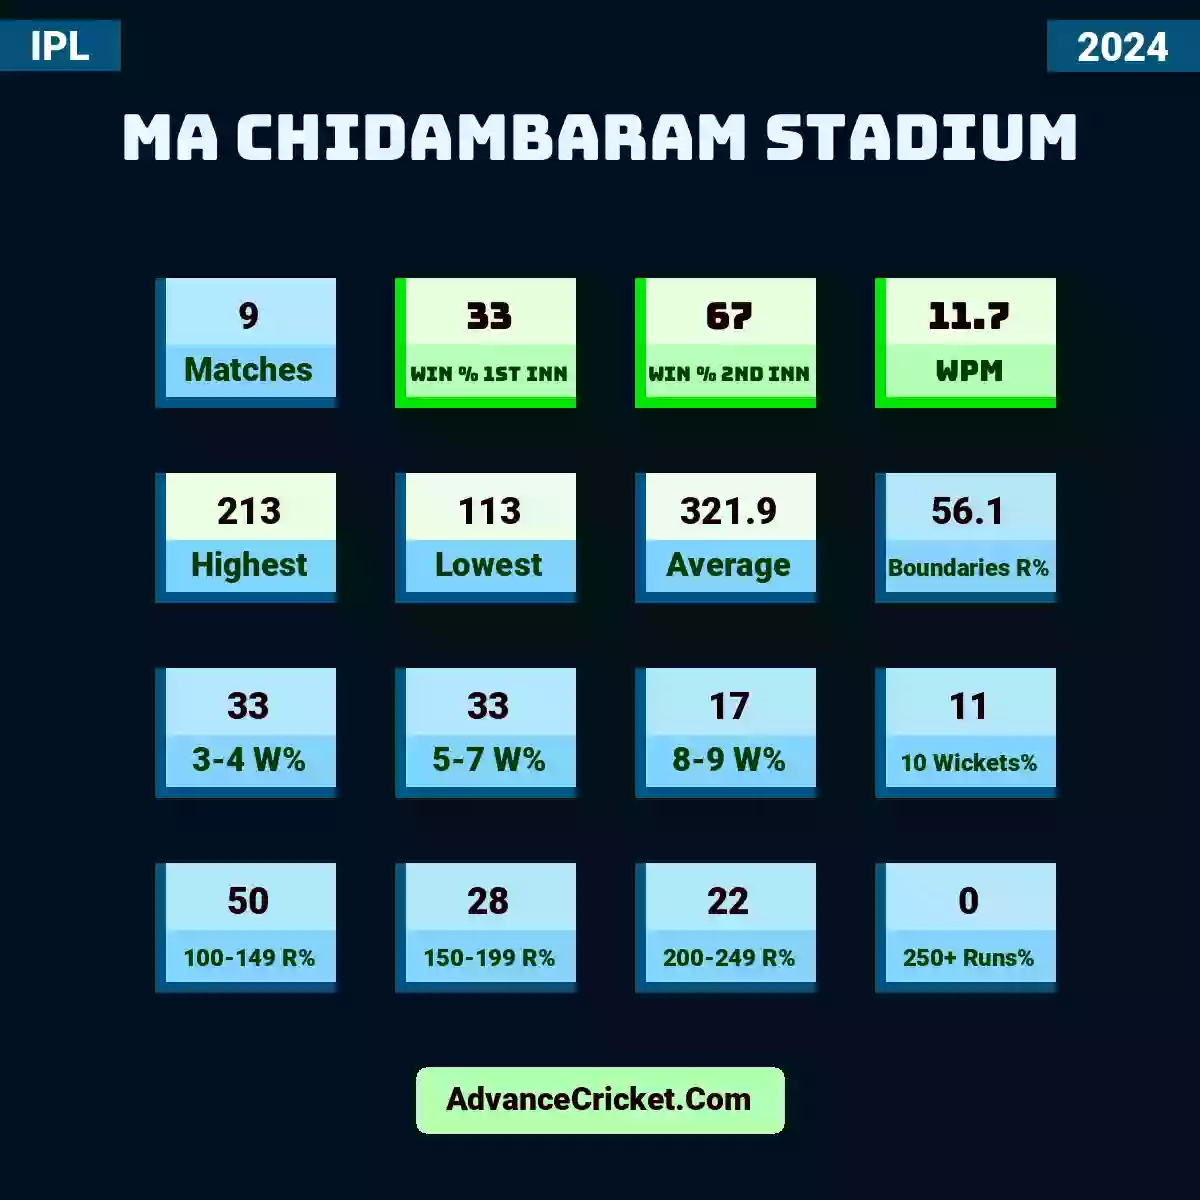 Image showing MA Chidambaram Stadium IPL 2024 with Matches: 6, Win % 1st Inn: 33, Win % 2nd Inn: 67, WPM: 11.2, Highest: 213, Lowest: 134, Average: 345.0, Boundaries R%: 57, 3-4 W%: 50, 5-7 W%: 25, 8-9 W%: 17, 10 Wickets%: 8, 100-149 R%: 33, 150-199 R%: 33, 200-249 R%: 33, 250+ Runs%: 0.